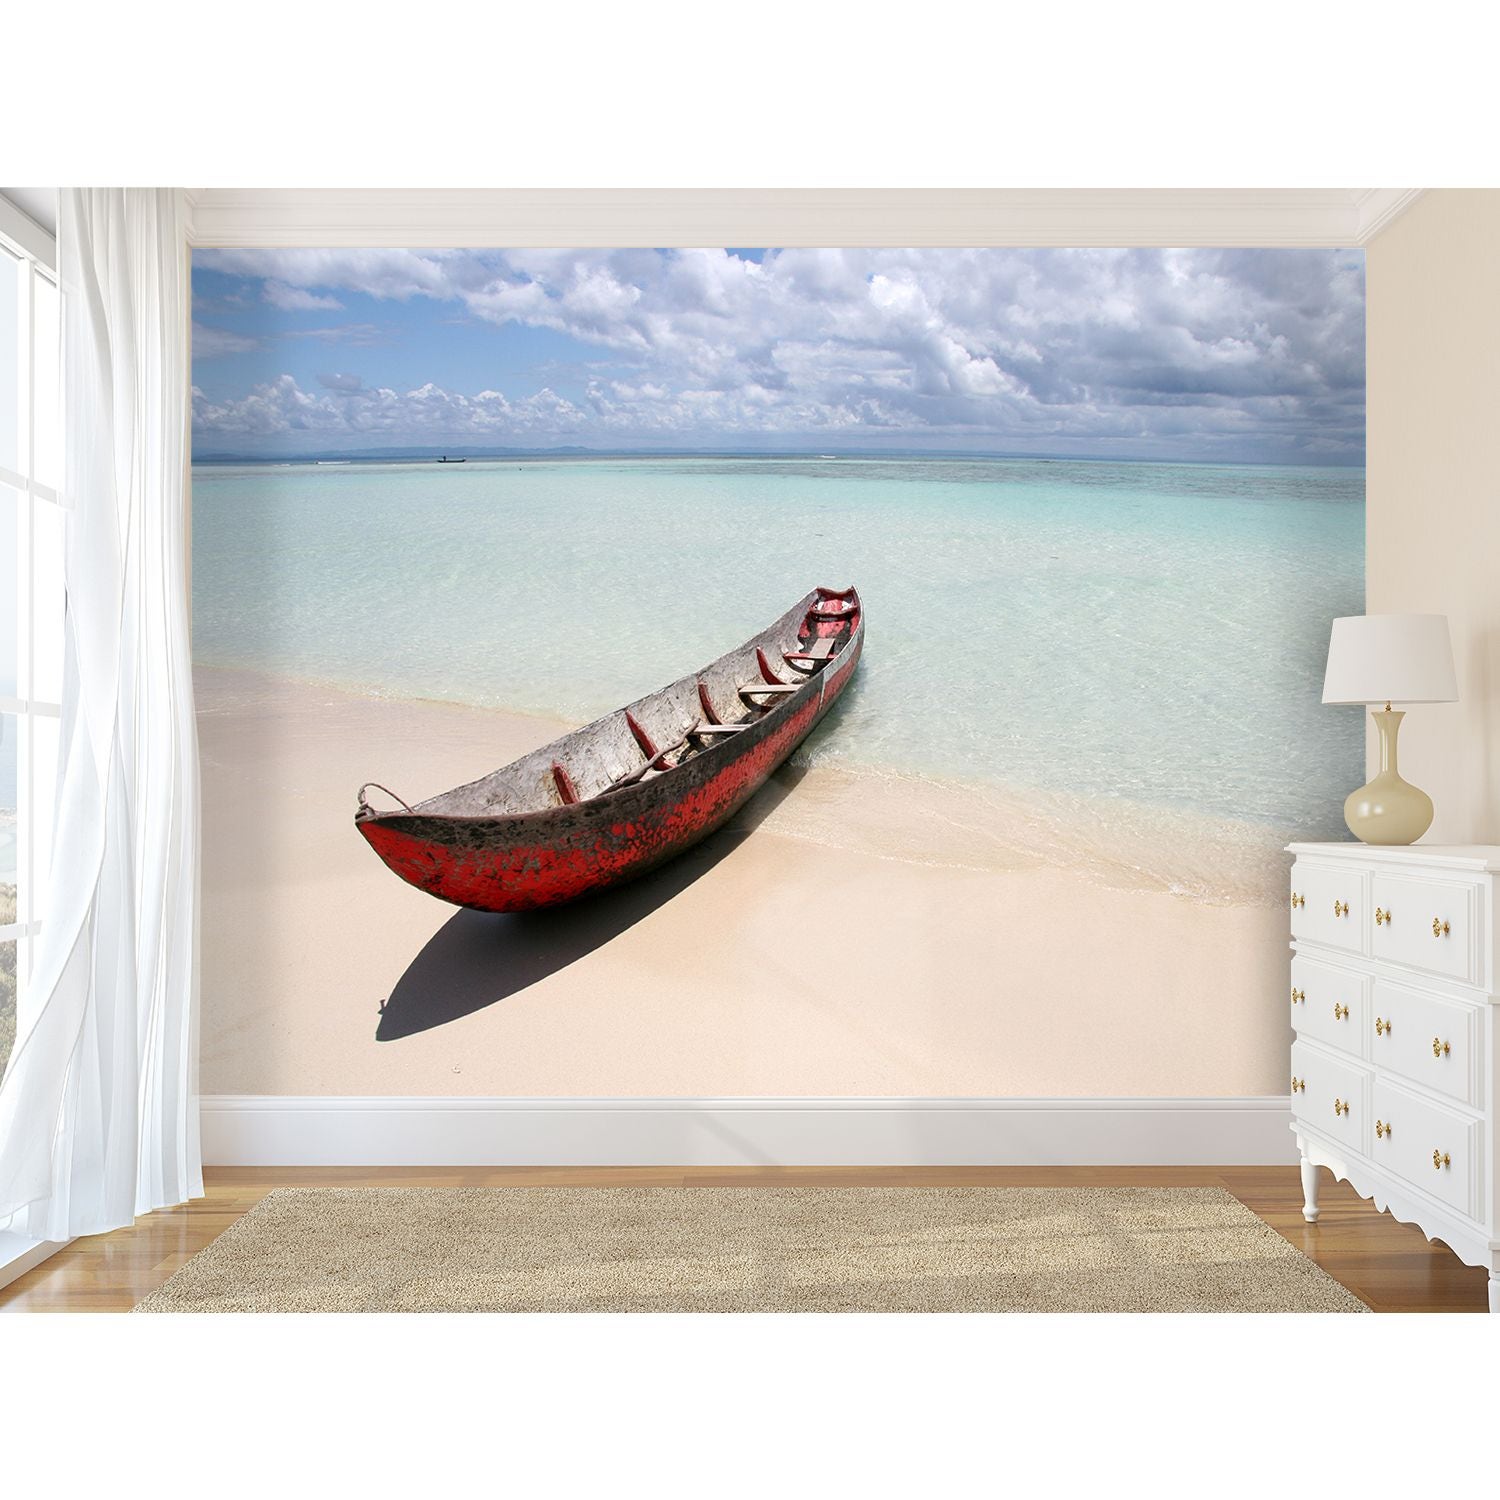 Fototapet hartie Canoe rosie 366 x 256 cm